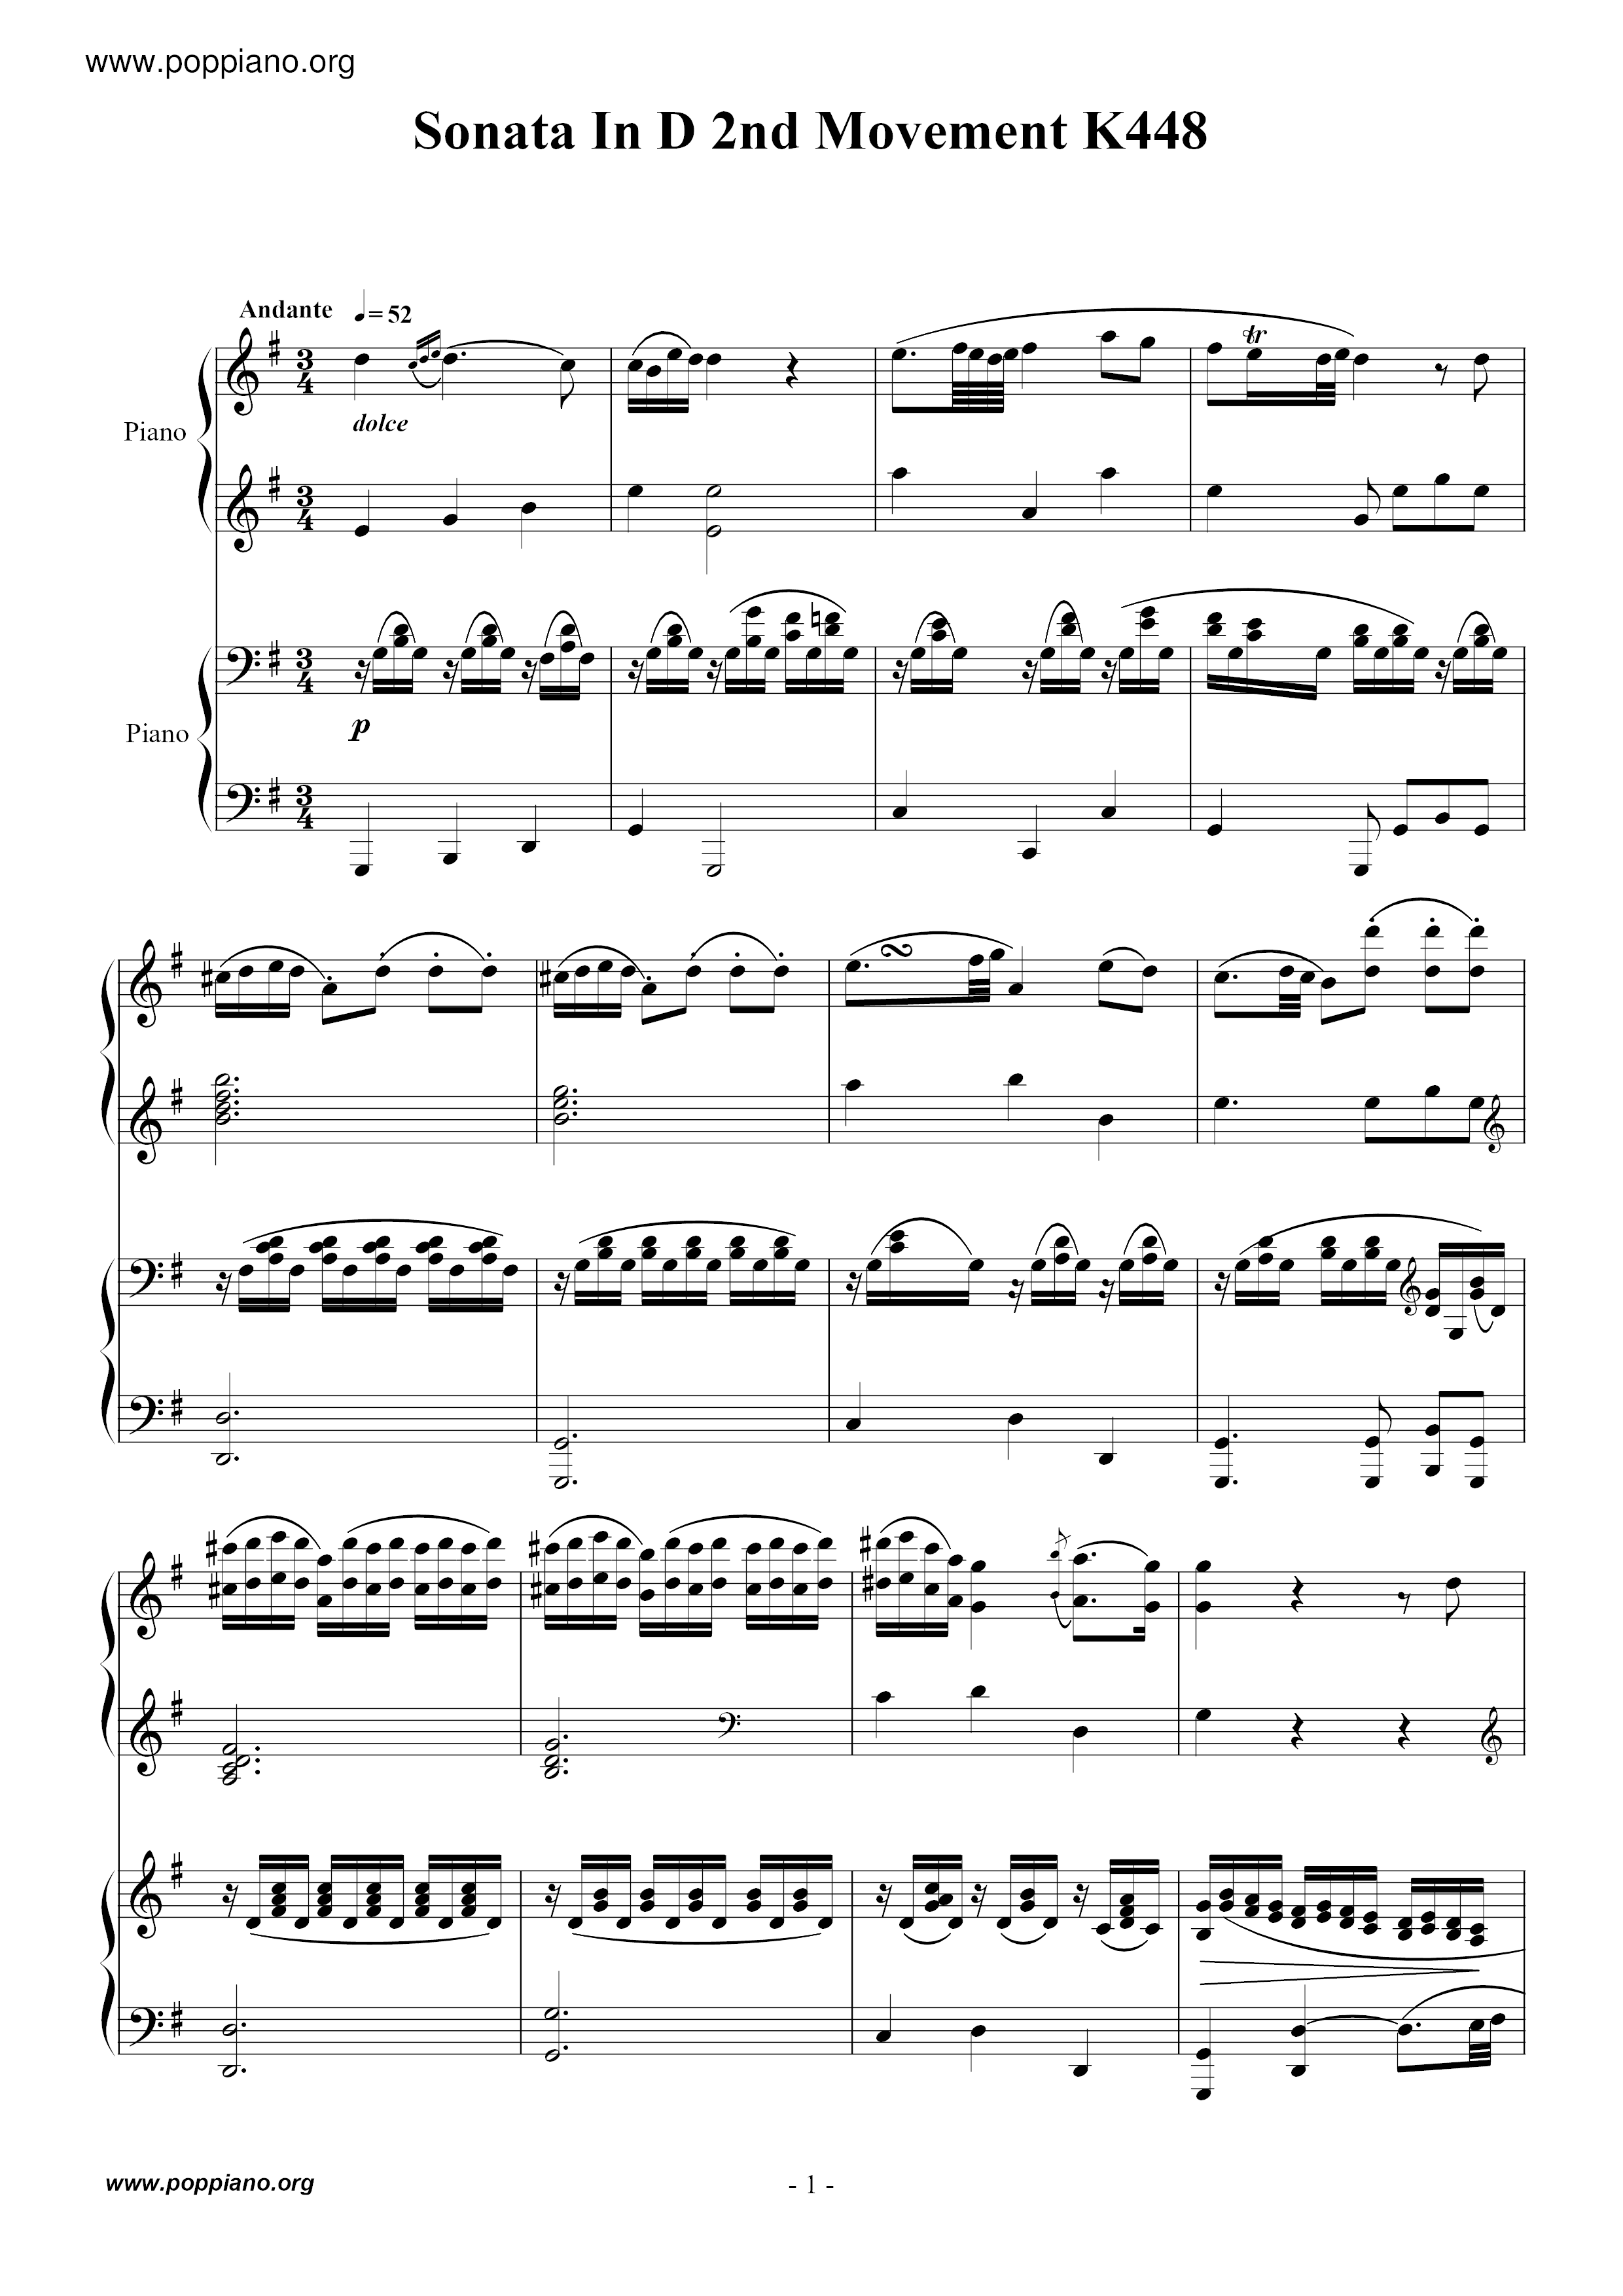 Sonata In D 2nd Movement K448 Score